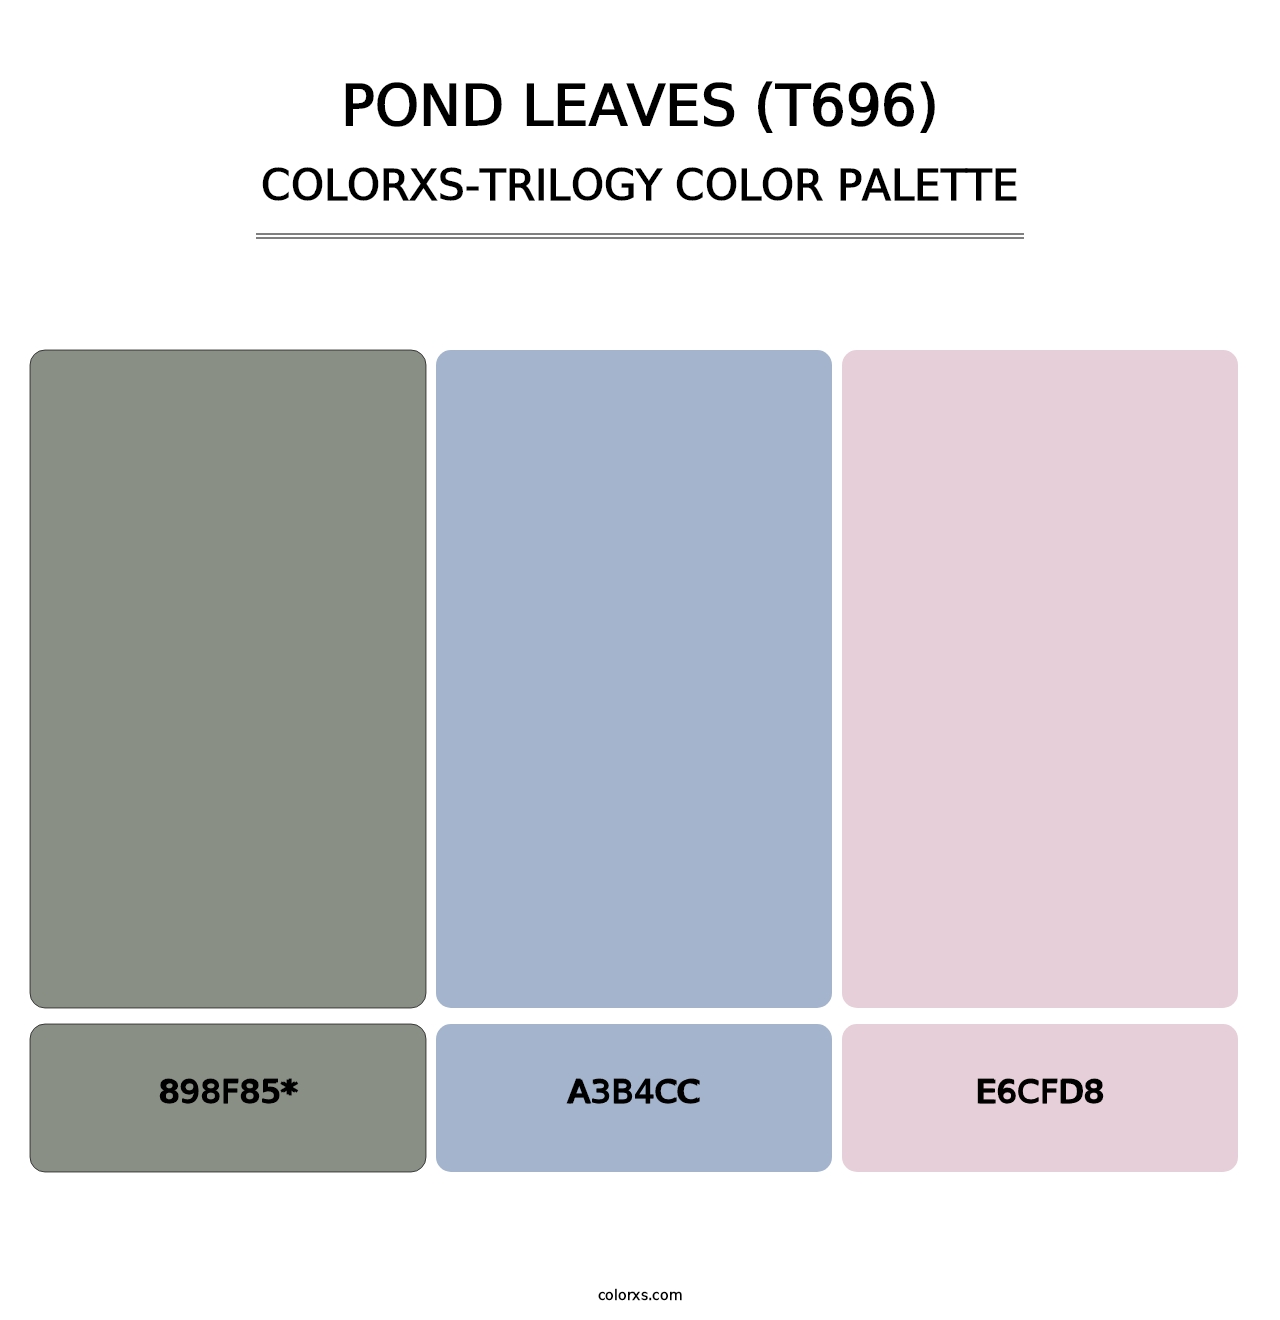 Pond Leaves (T696) - Colorxs Trilogy Palette